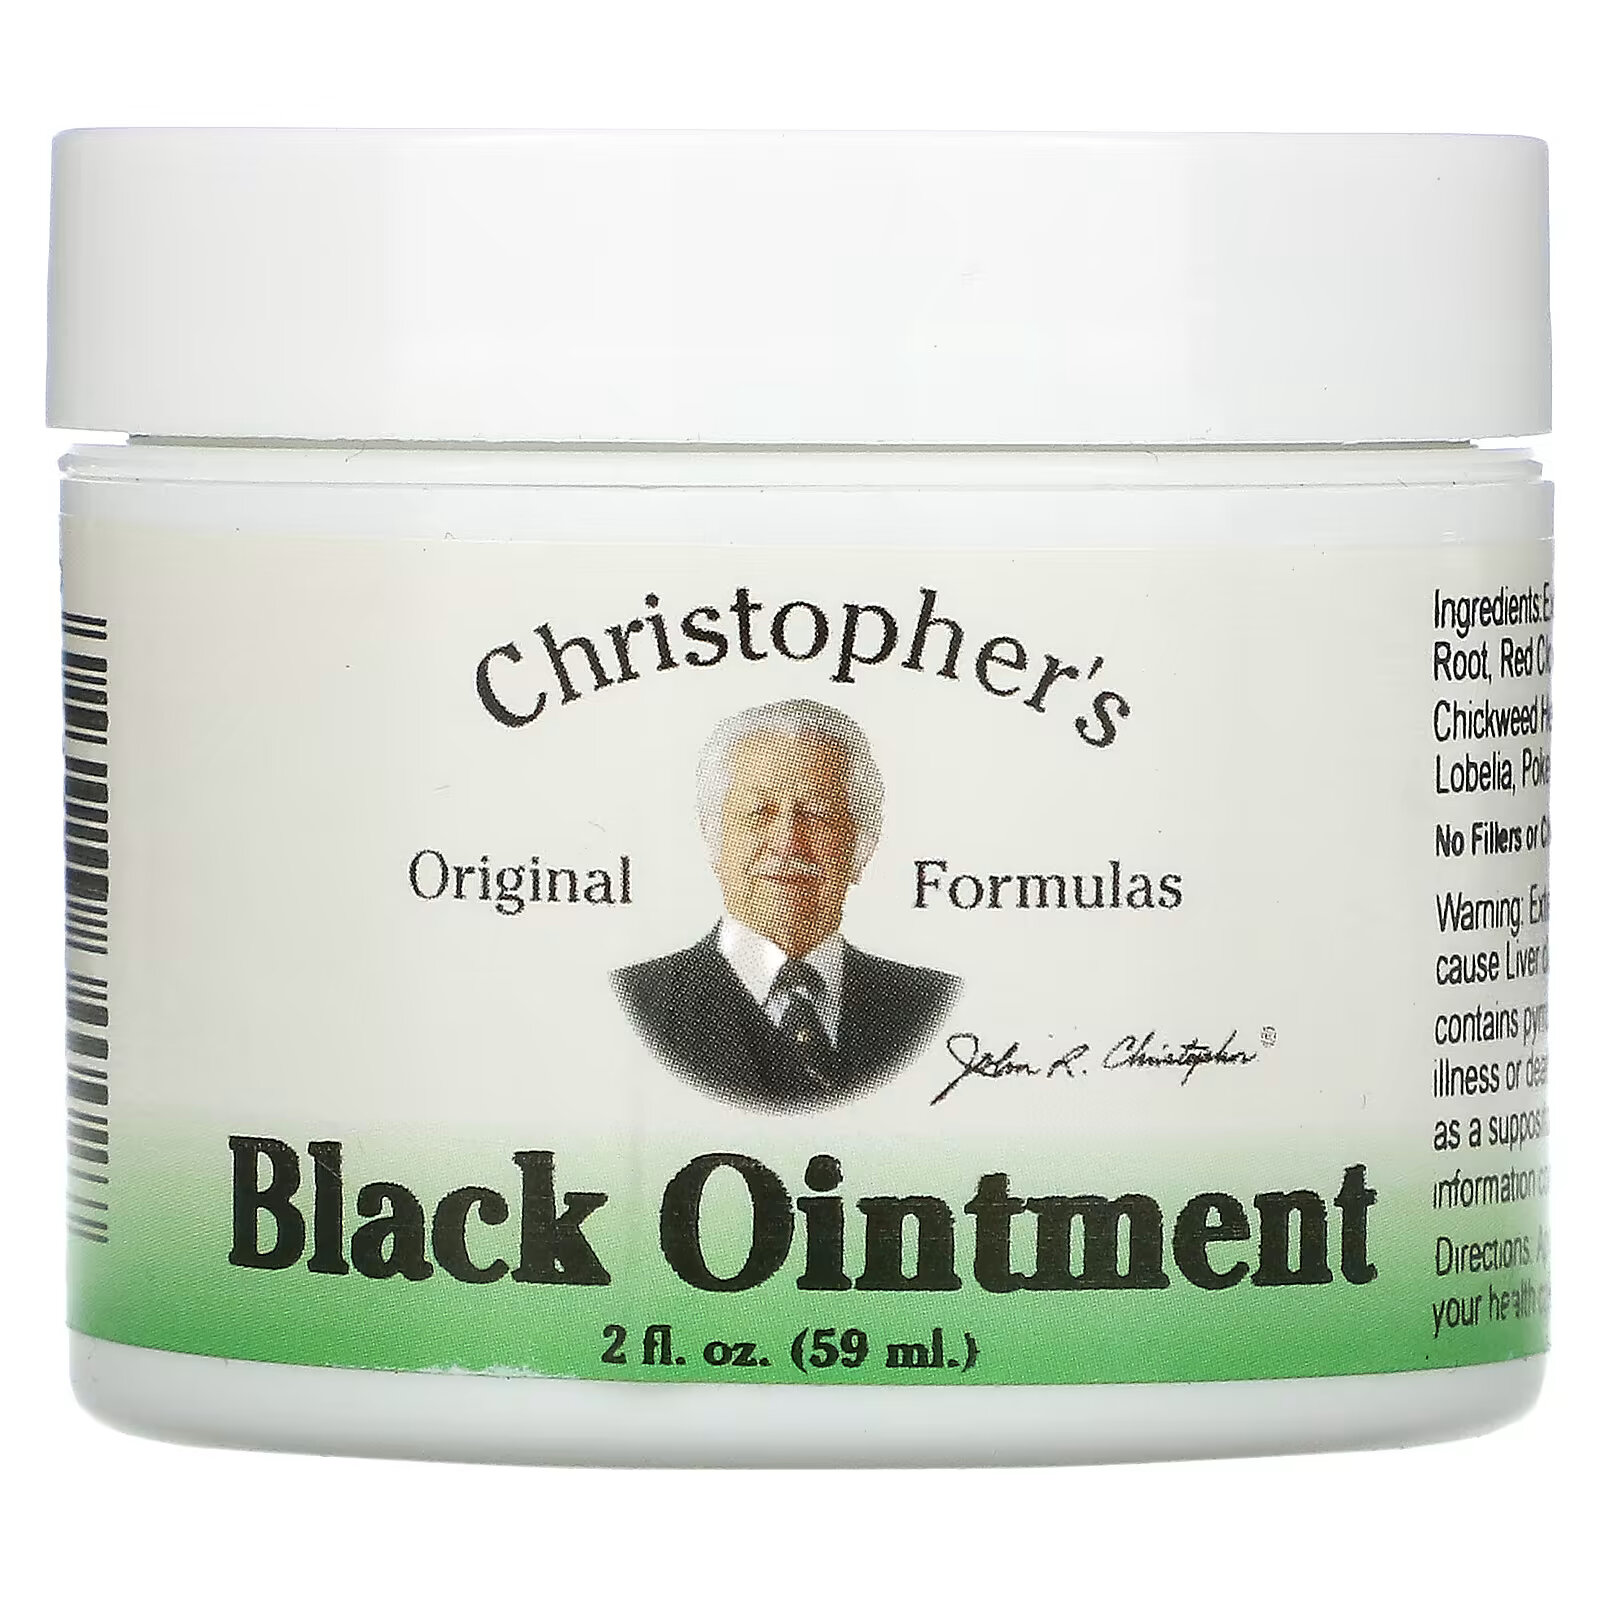 Christopher's Original Formulas, Black Ointment, противовоспалительная, 59 мл (2 жидкие унции) christopher s original formulas black ointment противовоспалительная 59 мл 2 жидкие унции